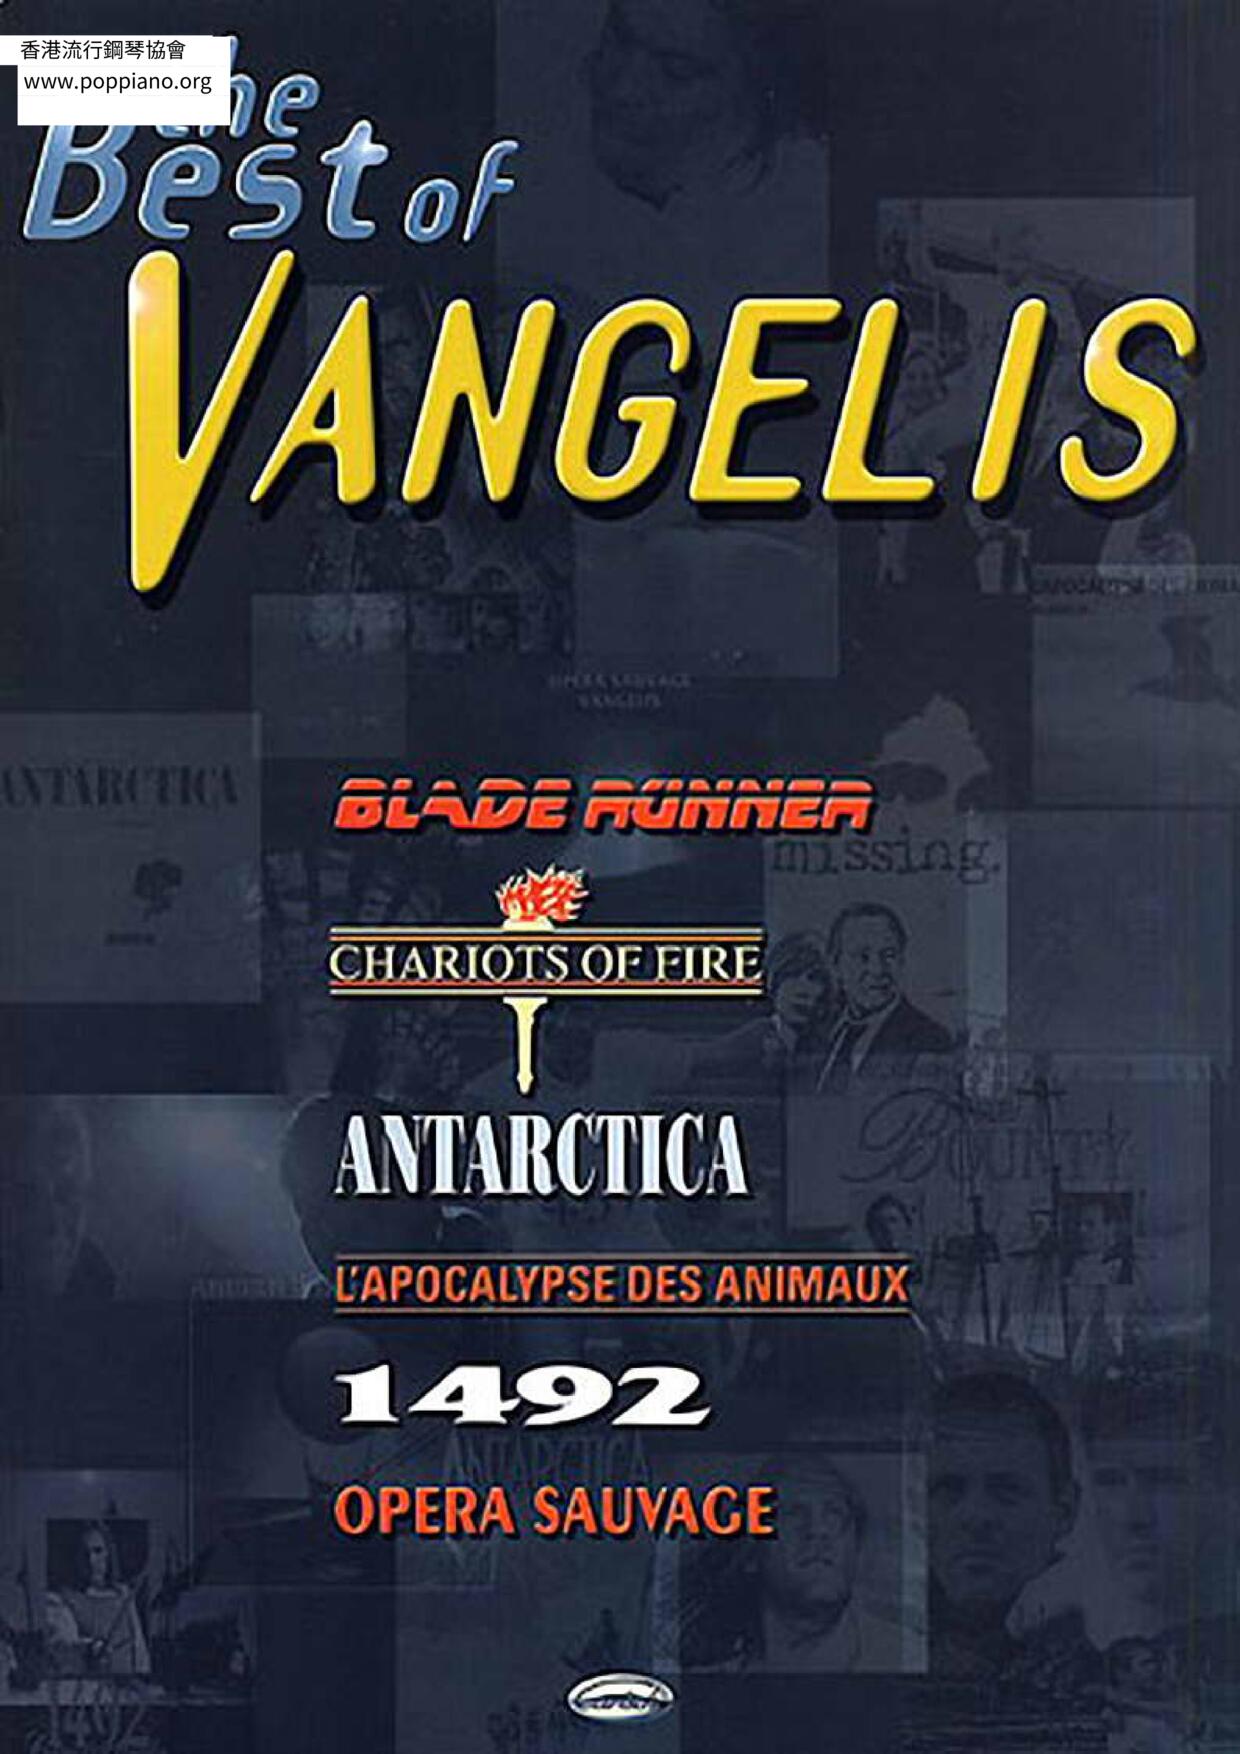 The Best Of Vangelis 57 pagesピアノ譜